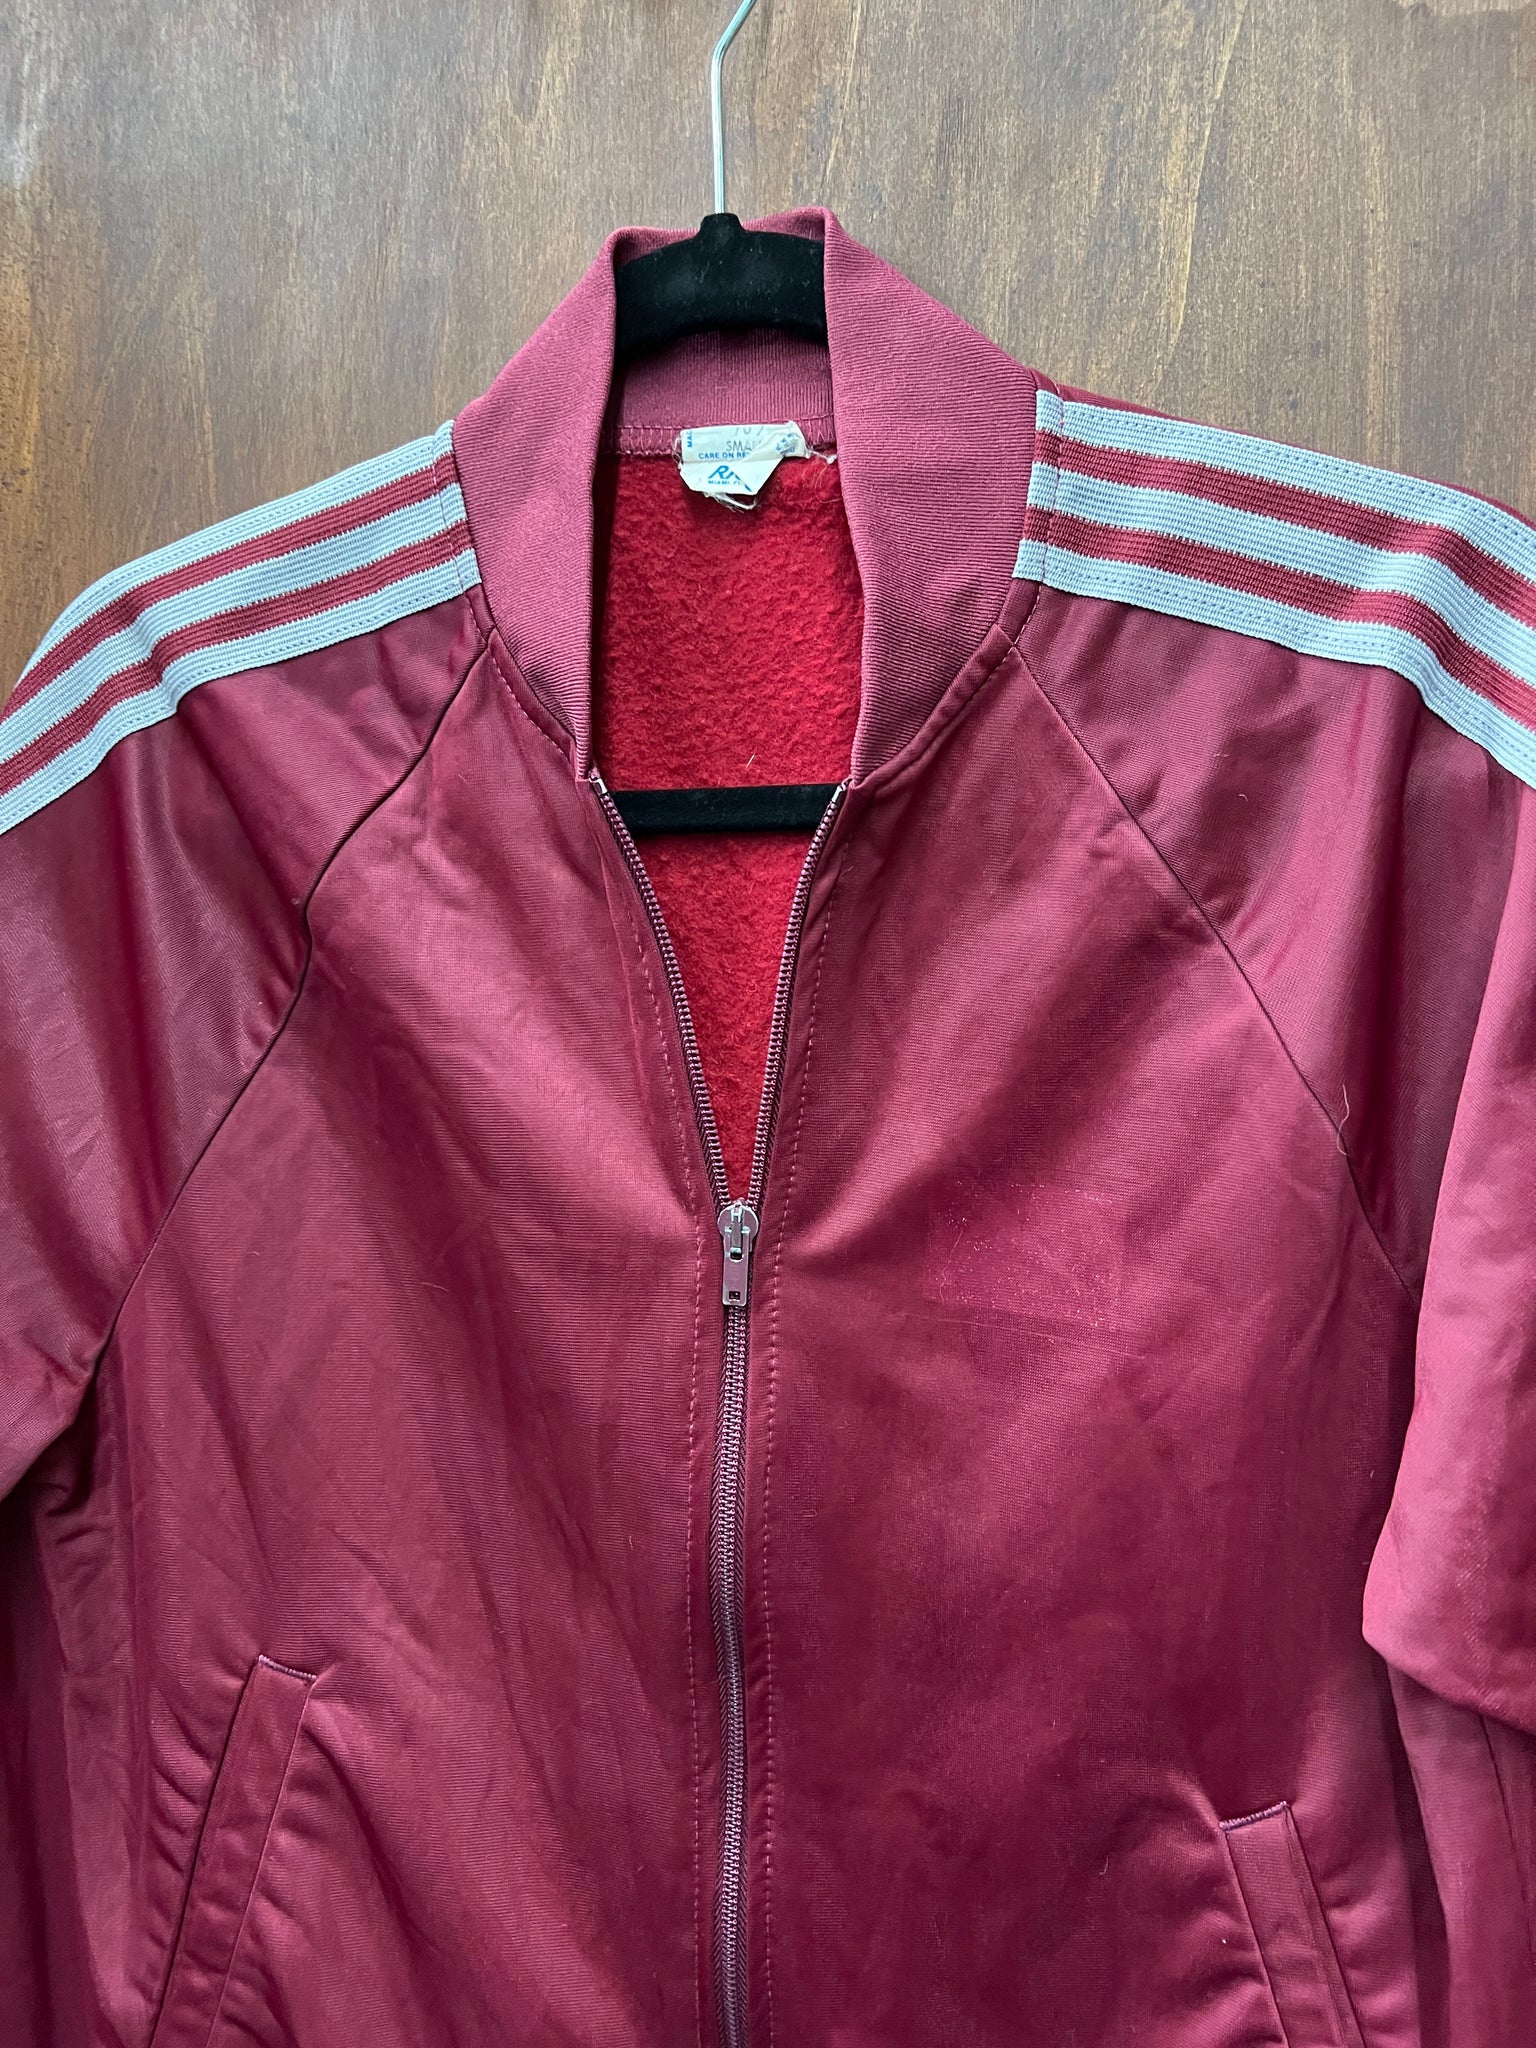 1970s TSHIRT- SWEATSHIRT- Rick/s burgundy addidas-style track jacket(As Is)